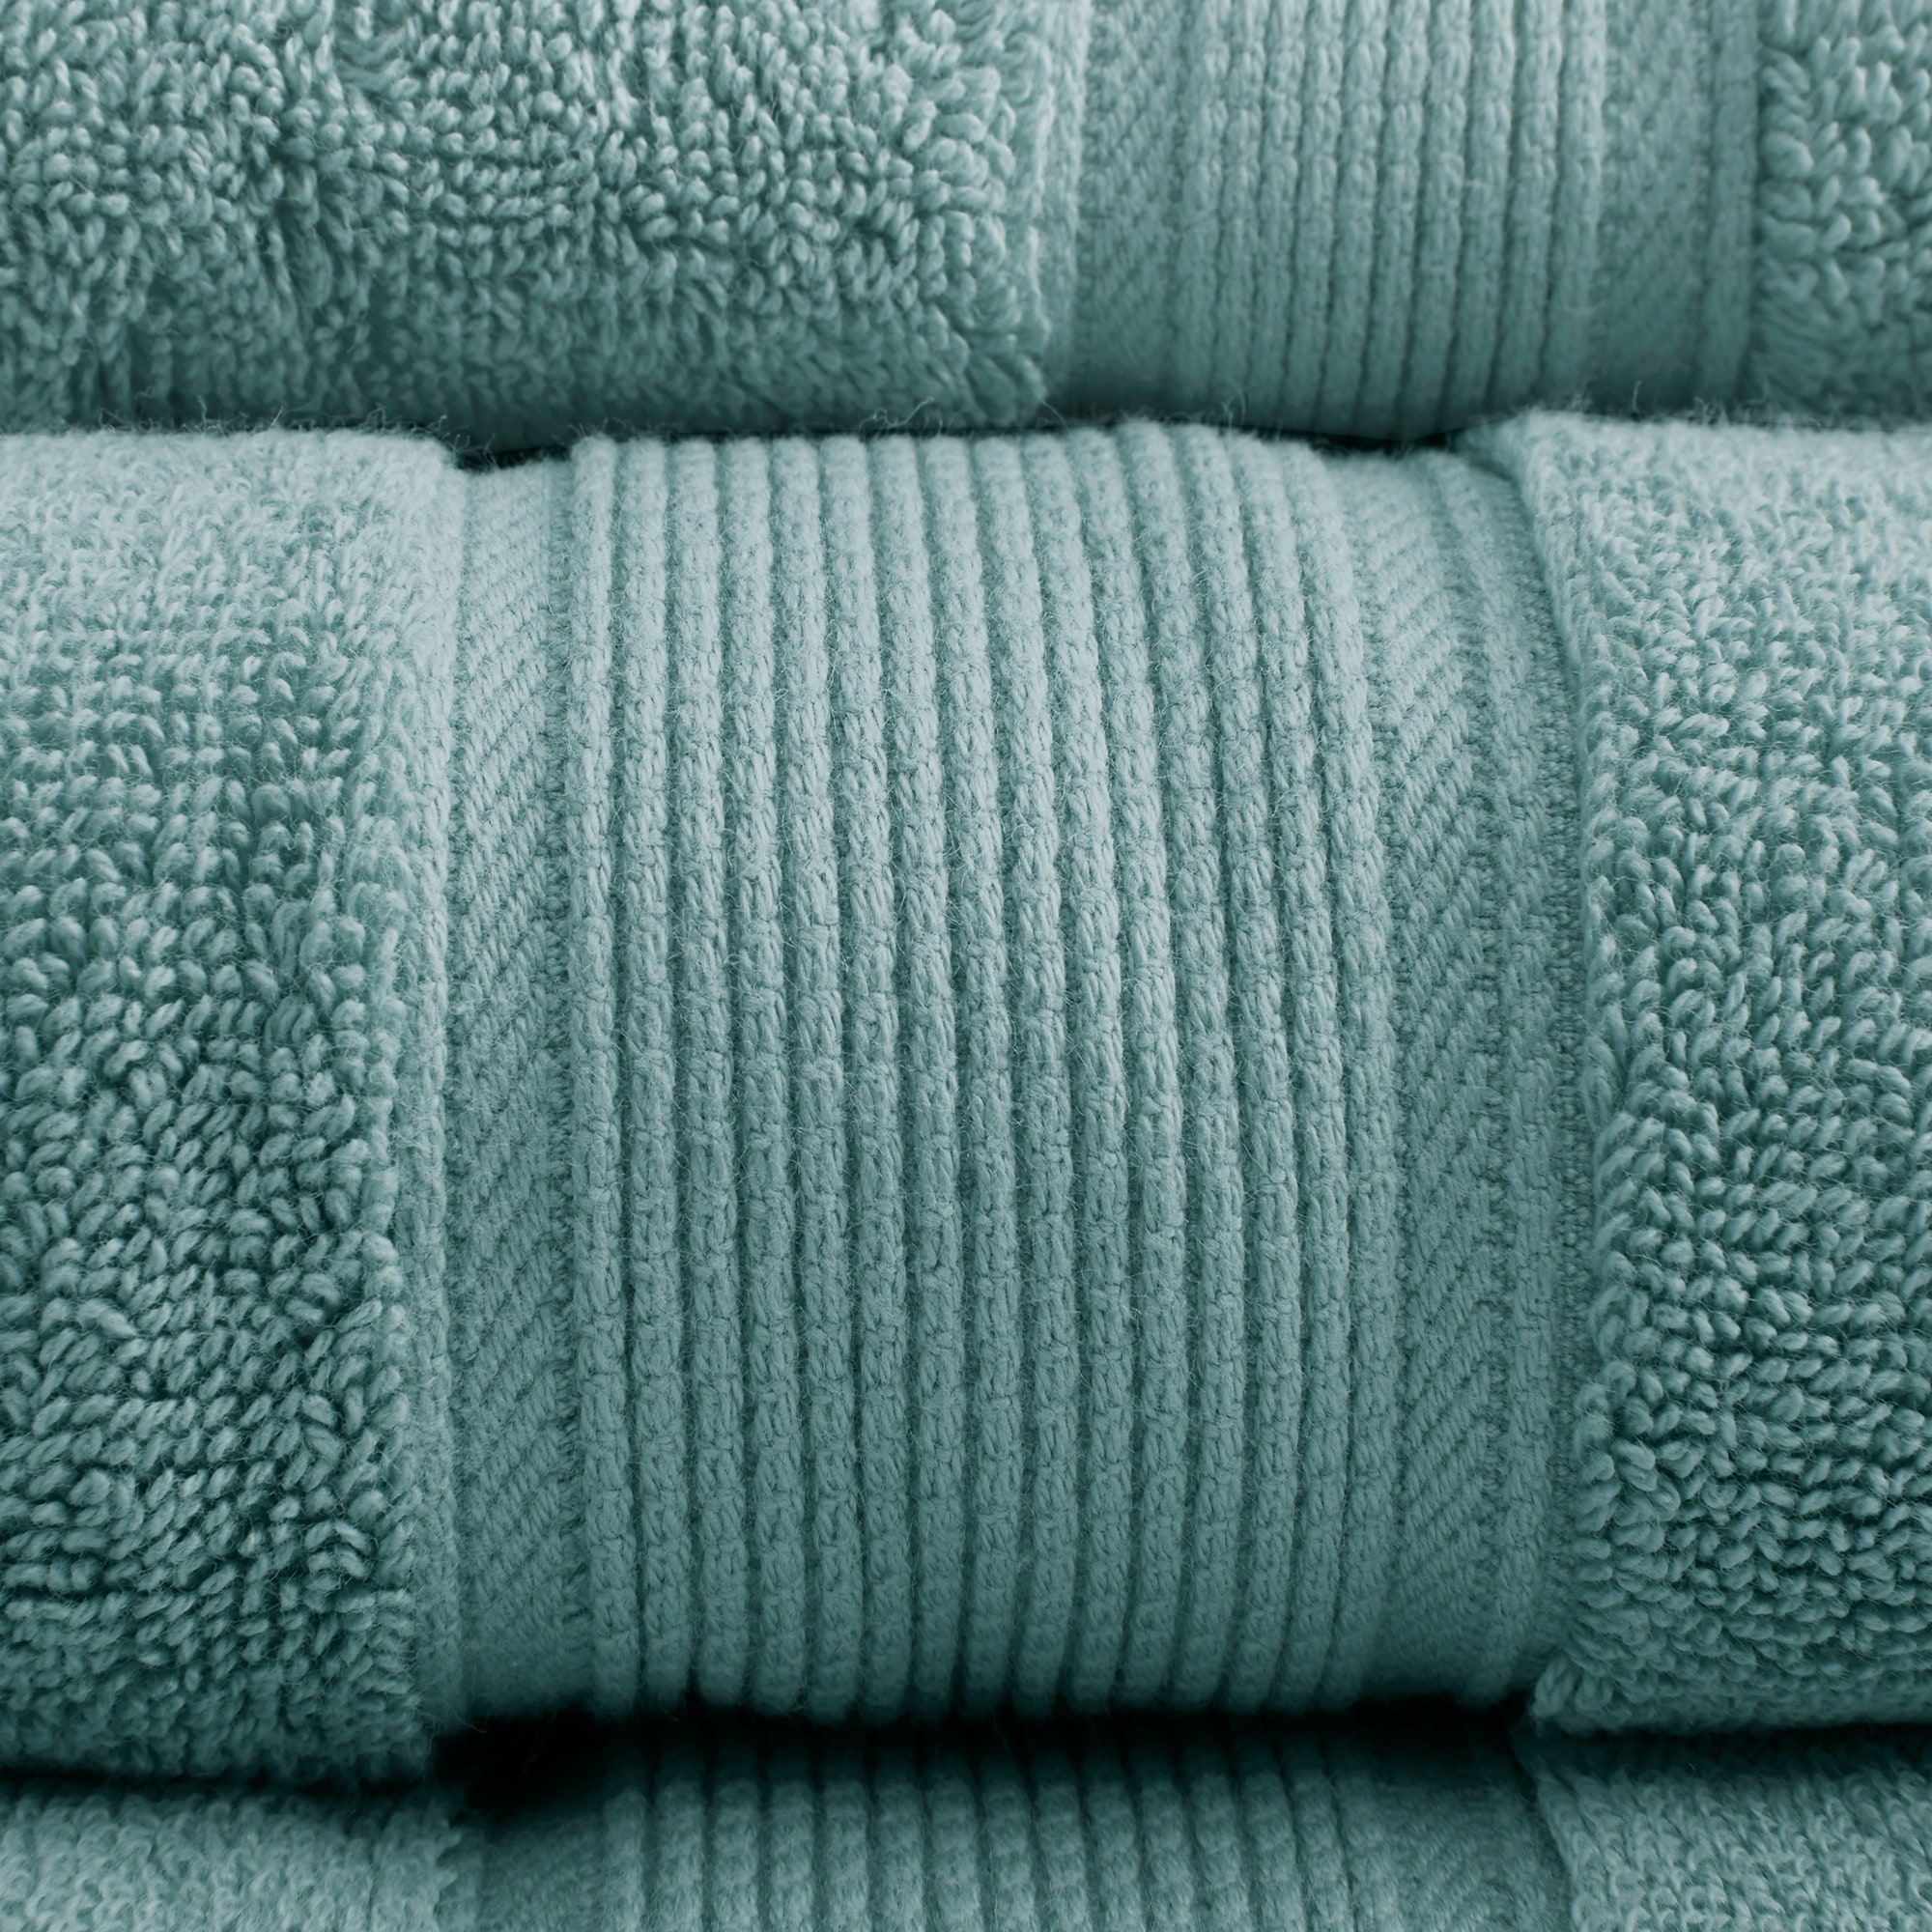 NEW Madison Park Signature 100% Cotton 8 Pcs Towel Set in Coral 800 GSM